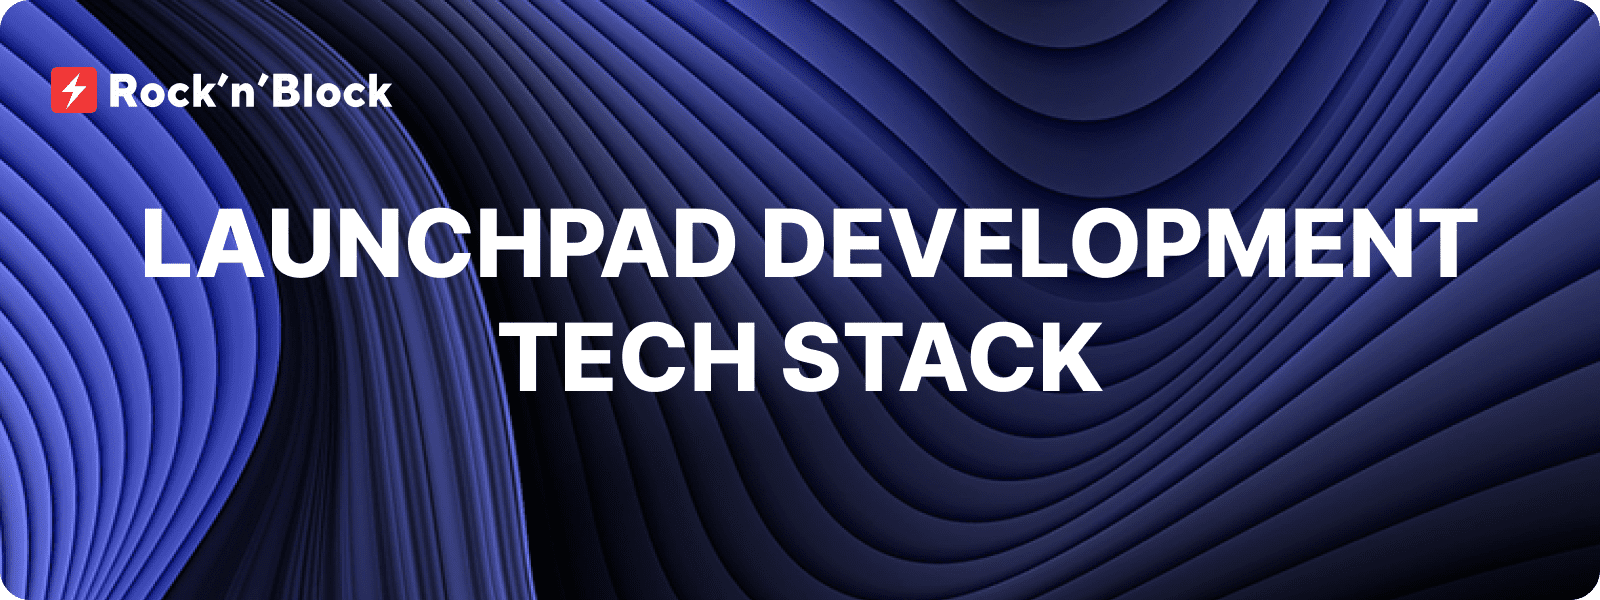 launchpad development Tech Stack